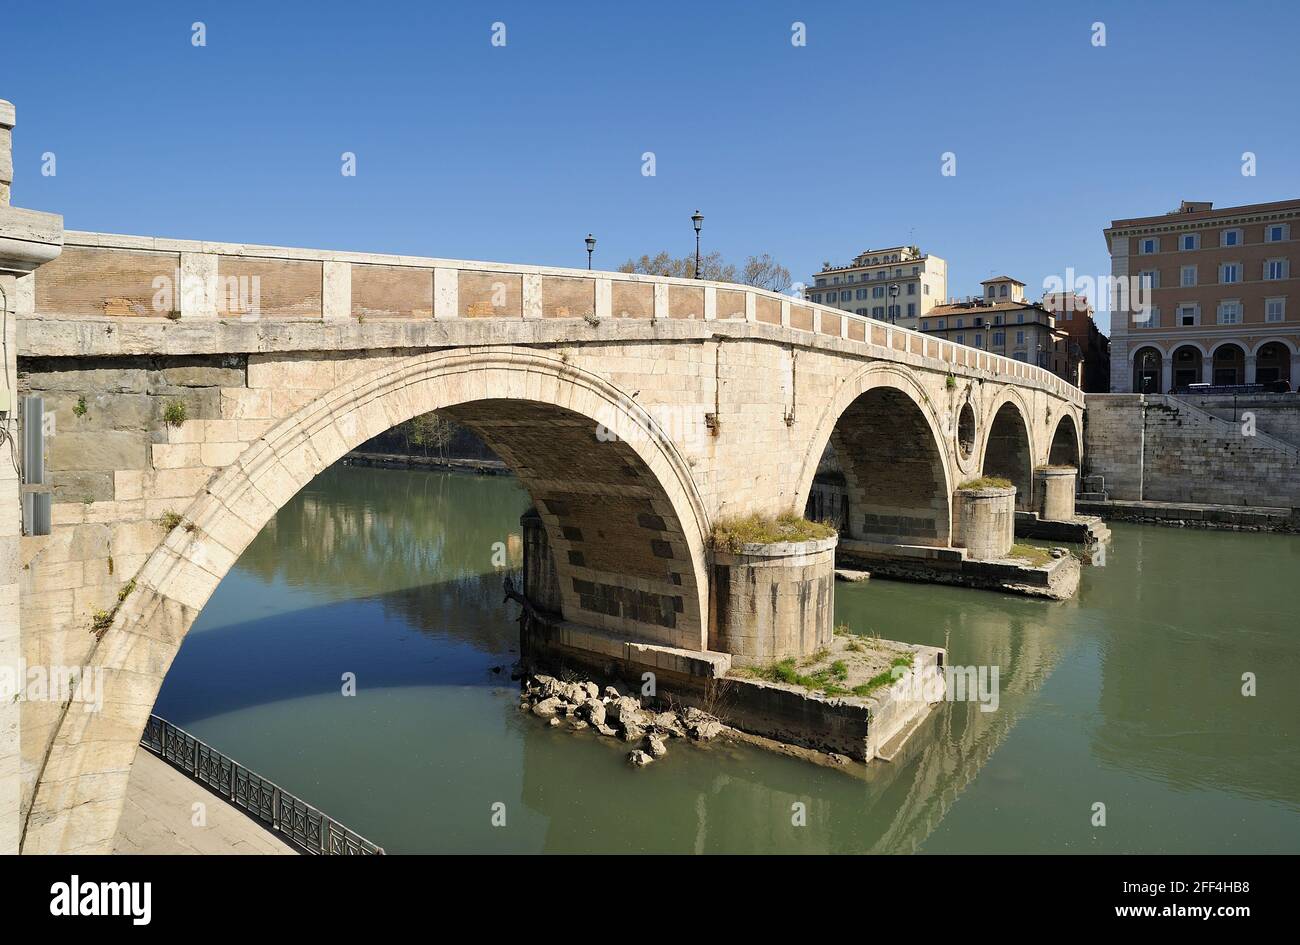 Italy, Rome, Tiber river, Ponte Sisto bridge Stock Photo